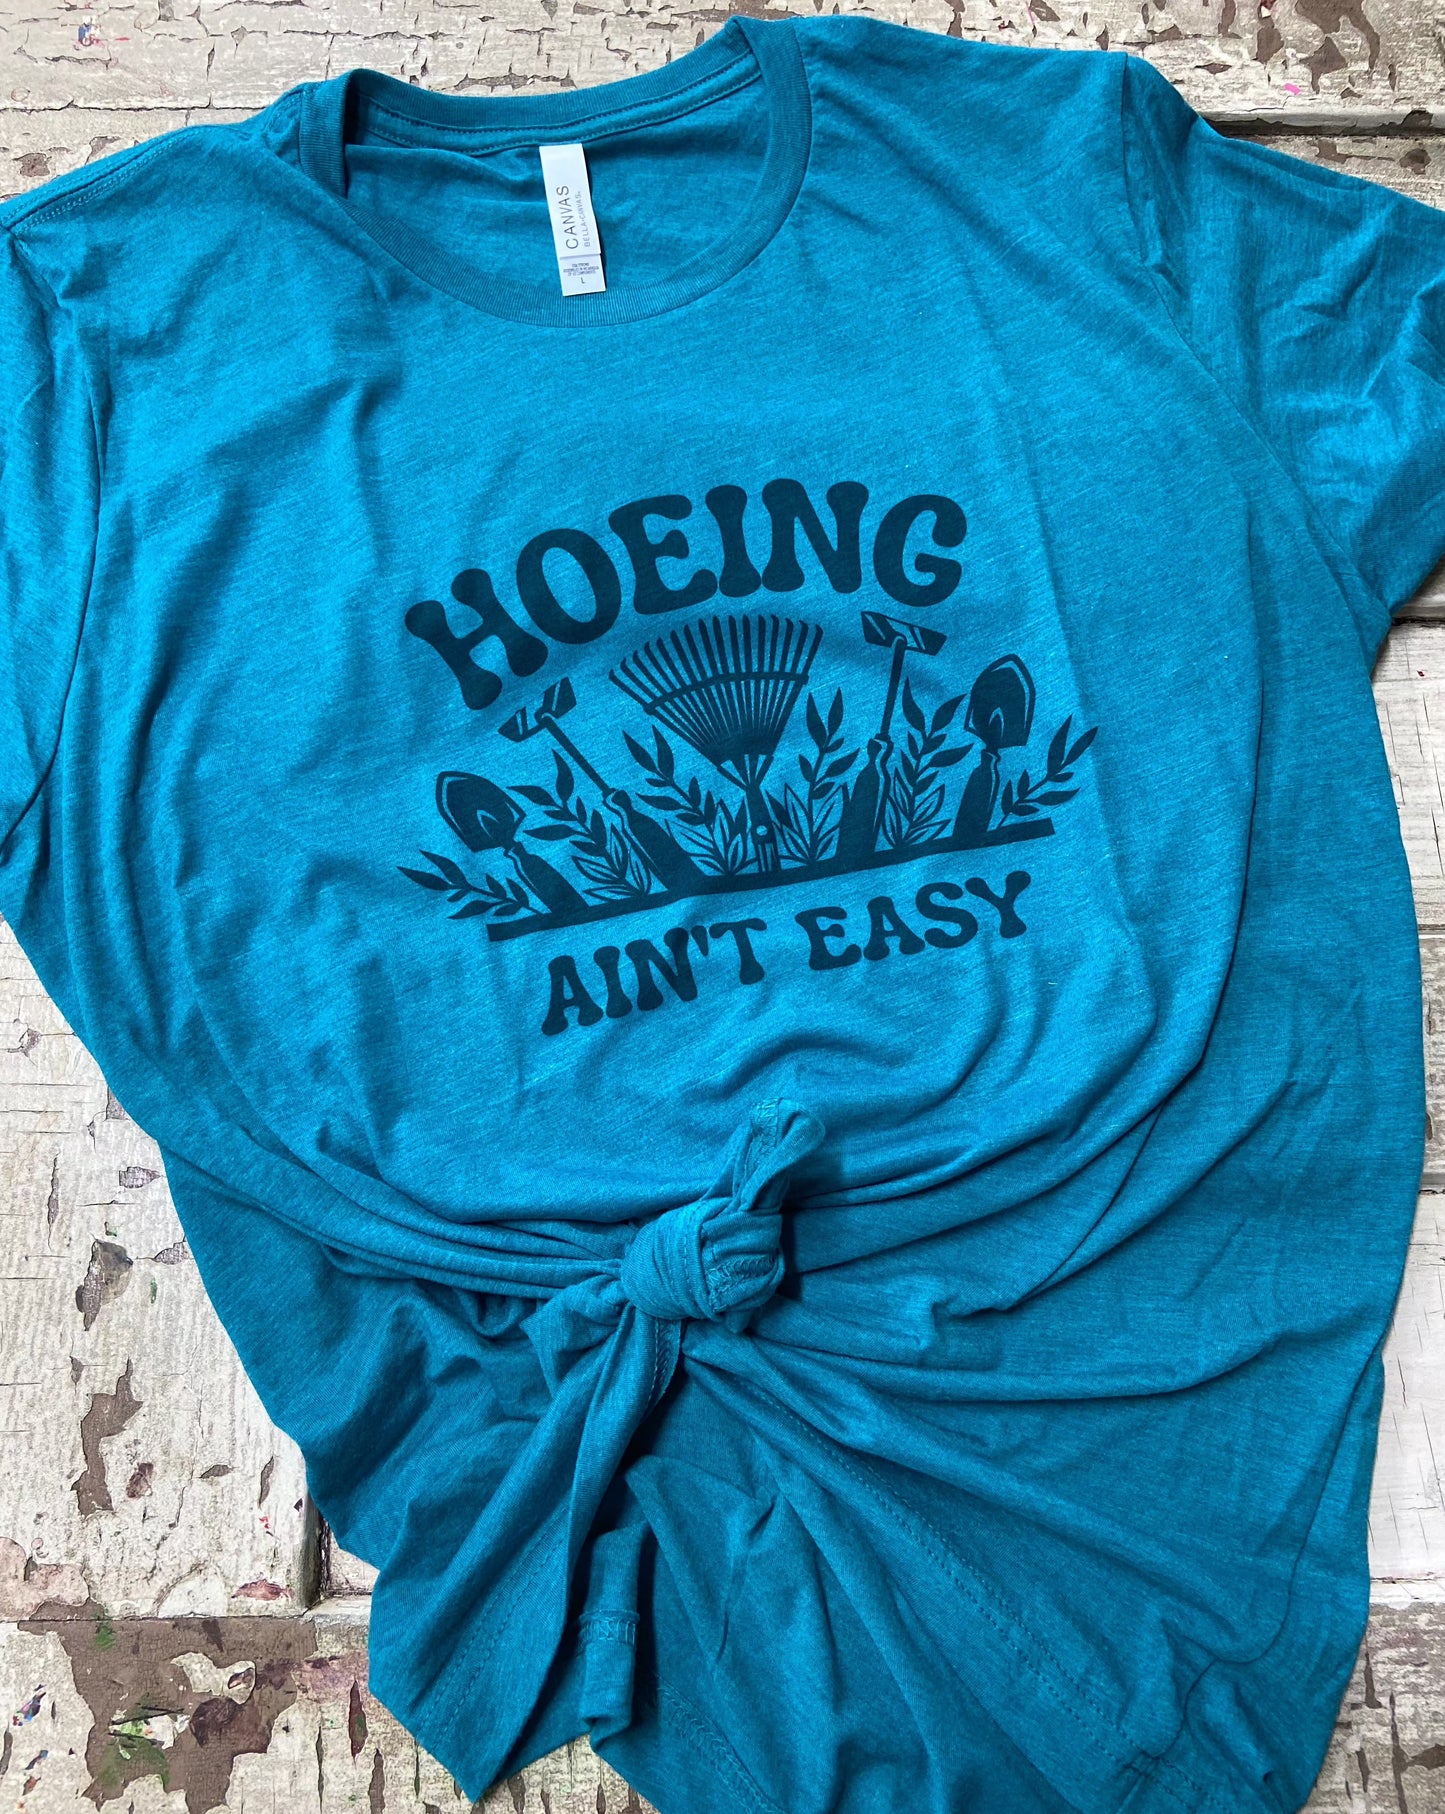 Hoeing Ain't Easy Tee